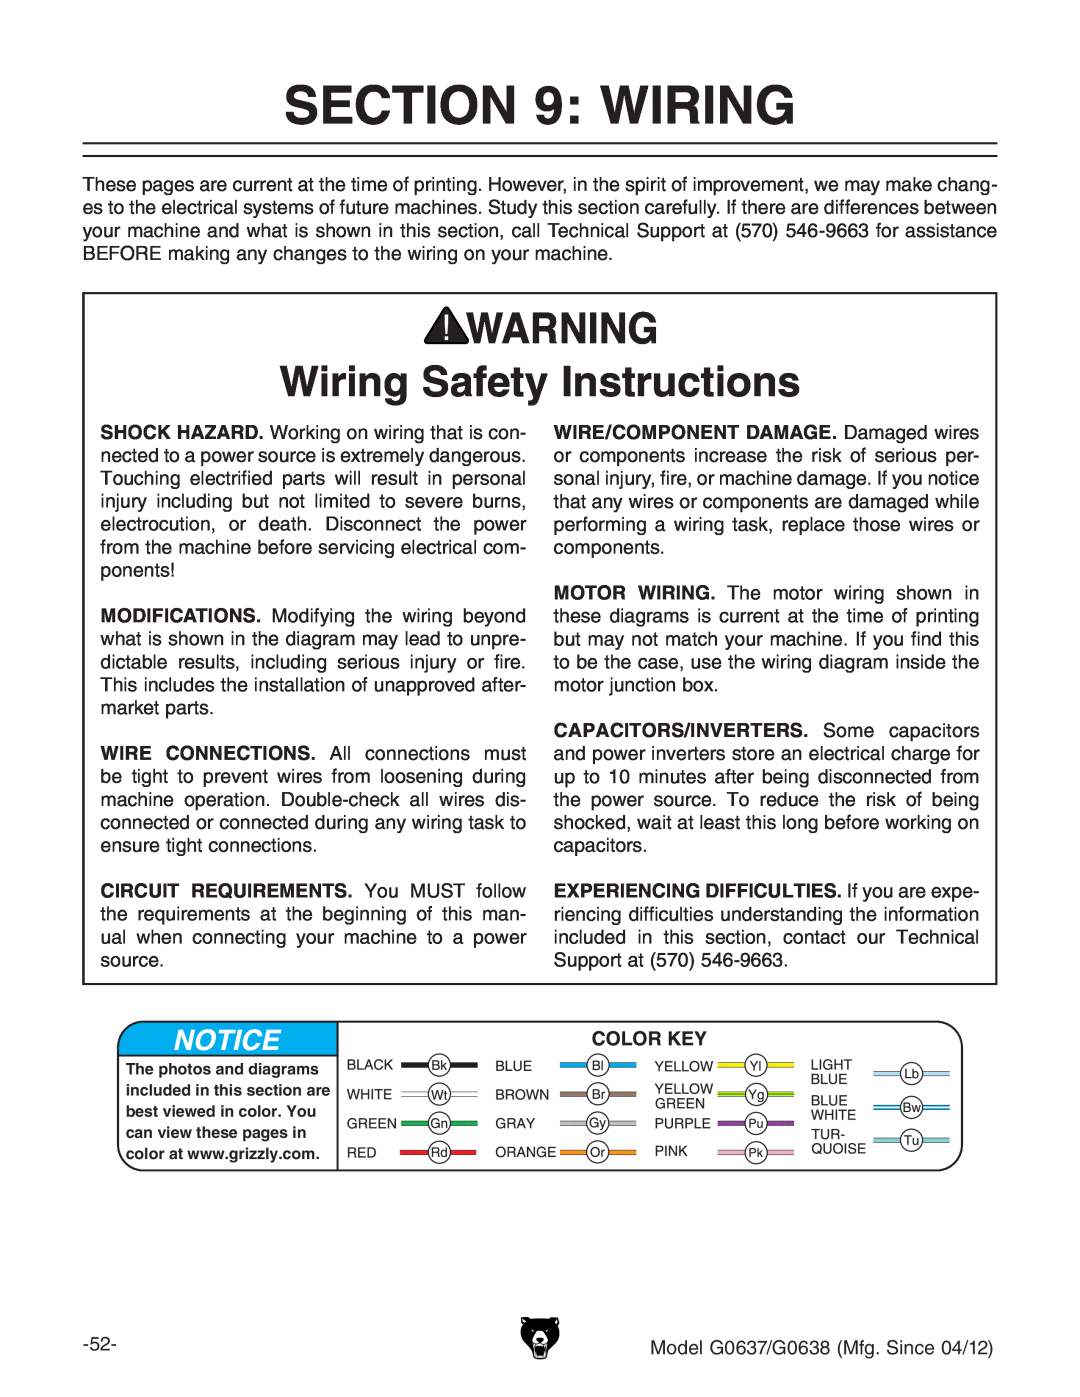 Grizzly G0637 Wiring Safety Instructions, SHOCK HAZARD. Ldg`^c\dcl^g^c\iVi^hXdc, XdbedcZcih#, edcZcih 